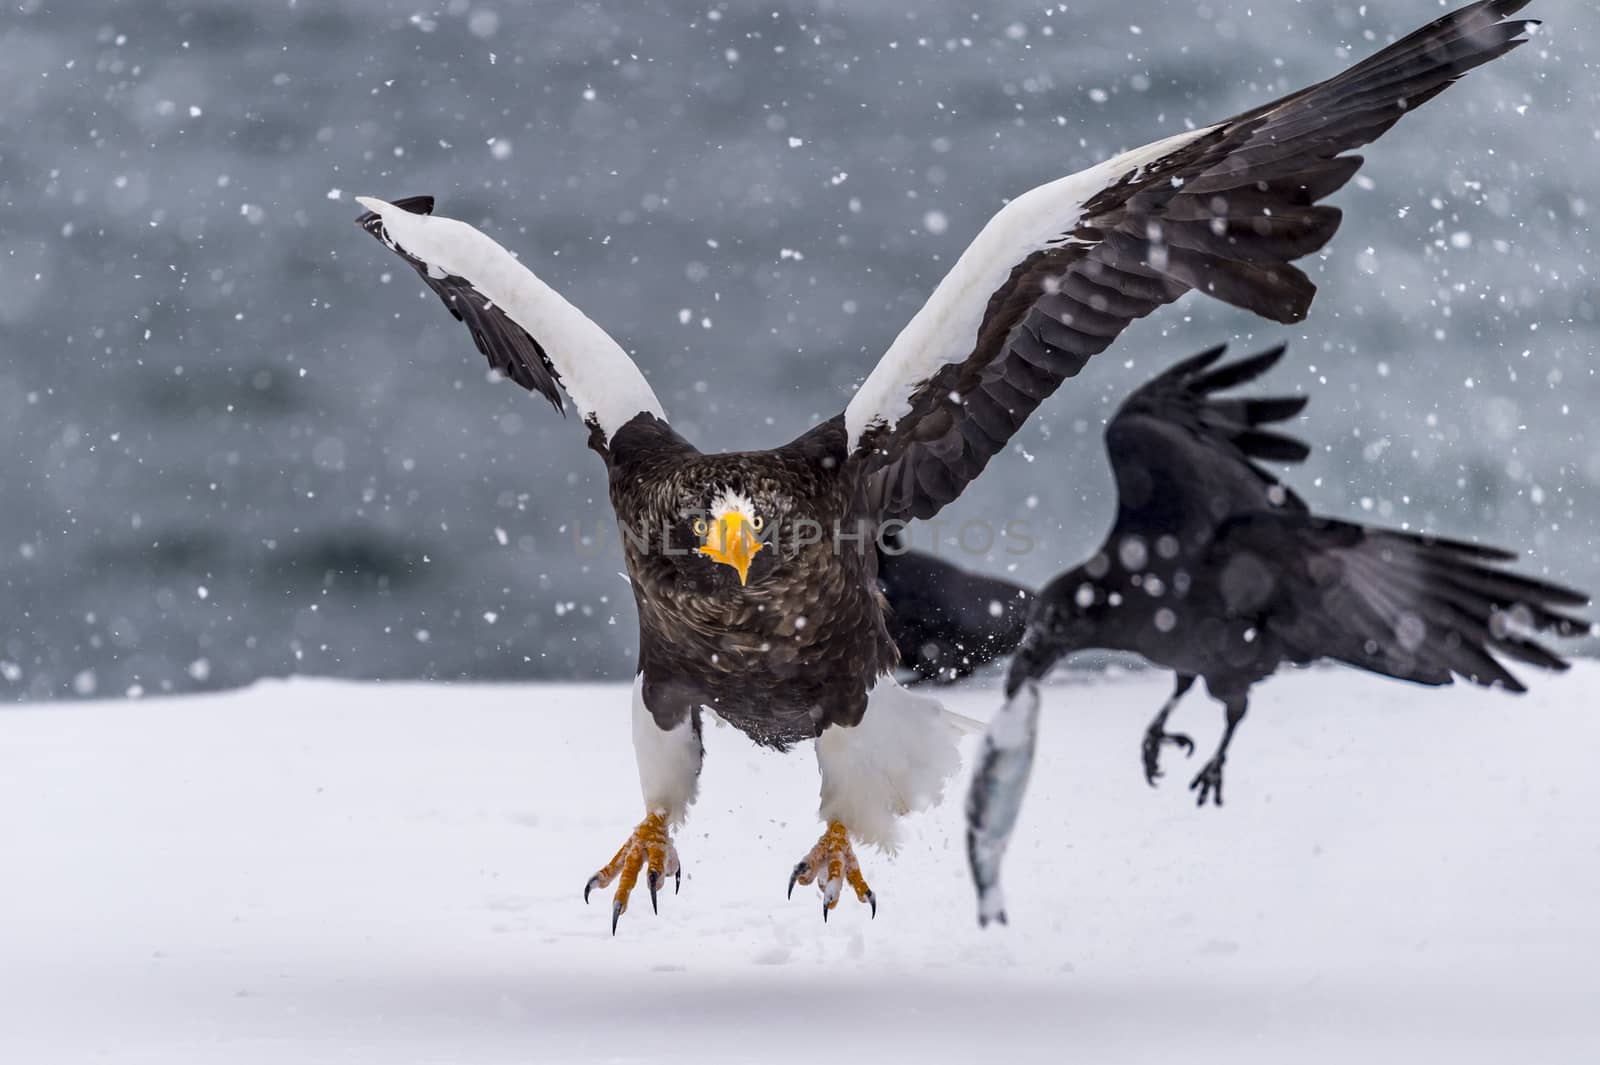 The Predatory Stellers Sea-eagle in the snow near Rausu at Shiretoko, Hokkaido of Japan.